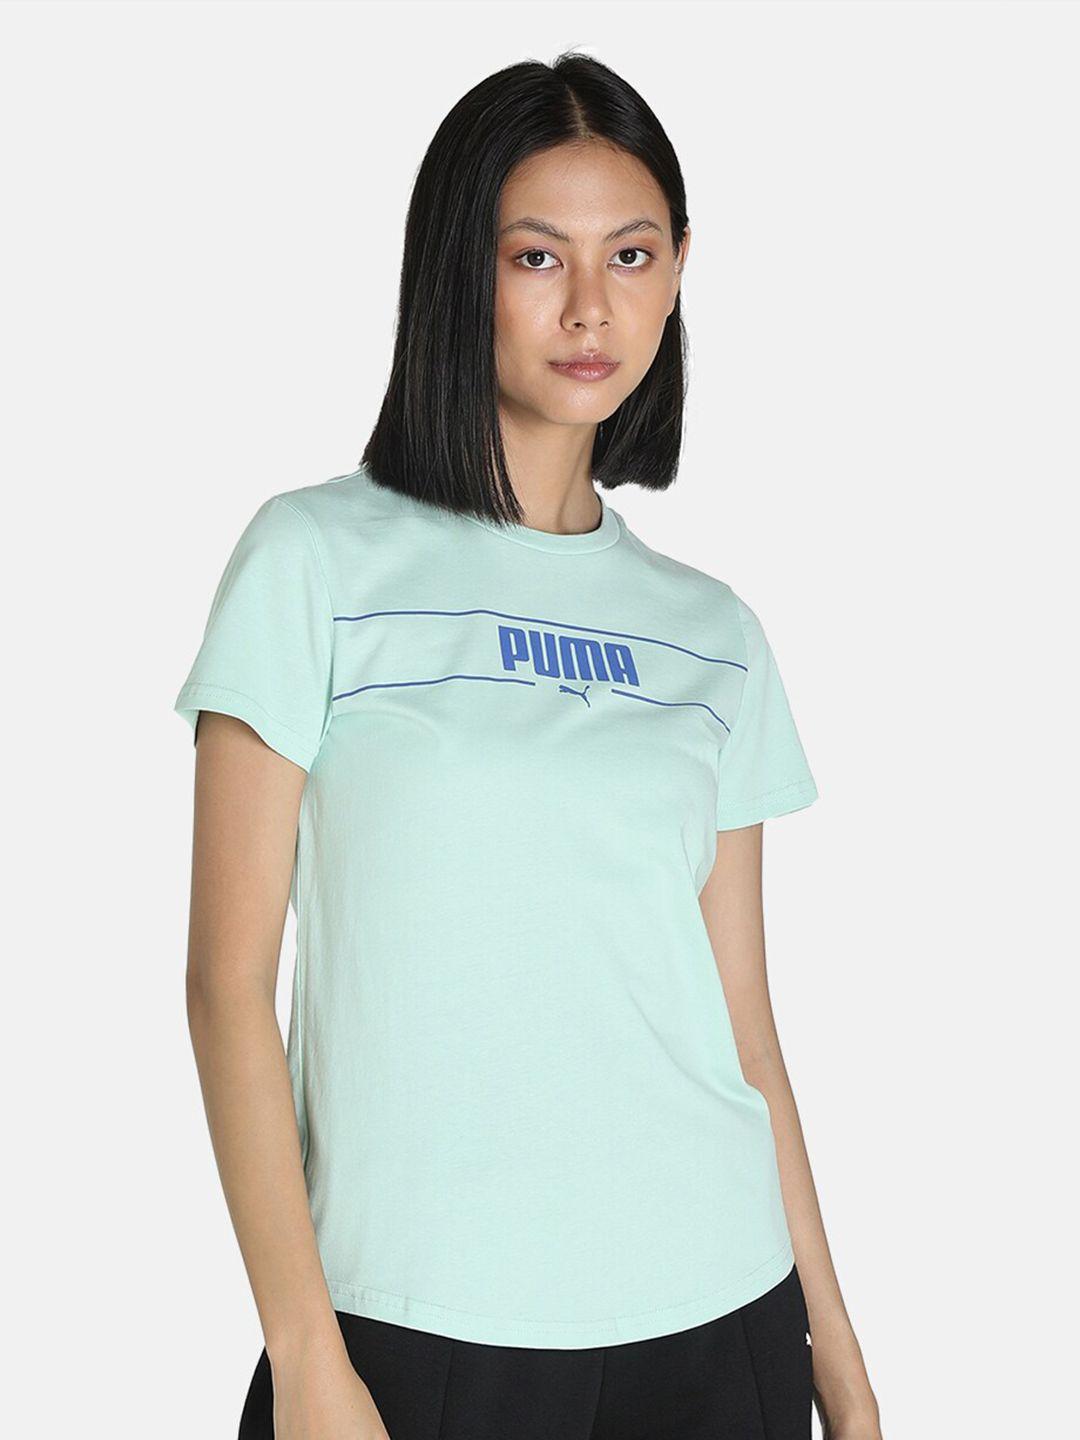 puma-women-green-brand-logo-printed-training-or-gym-cotton-t-shirt